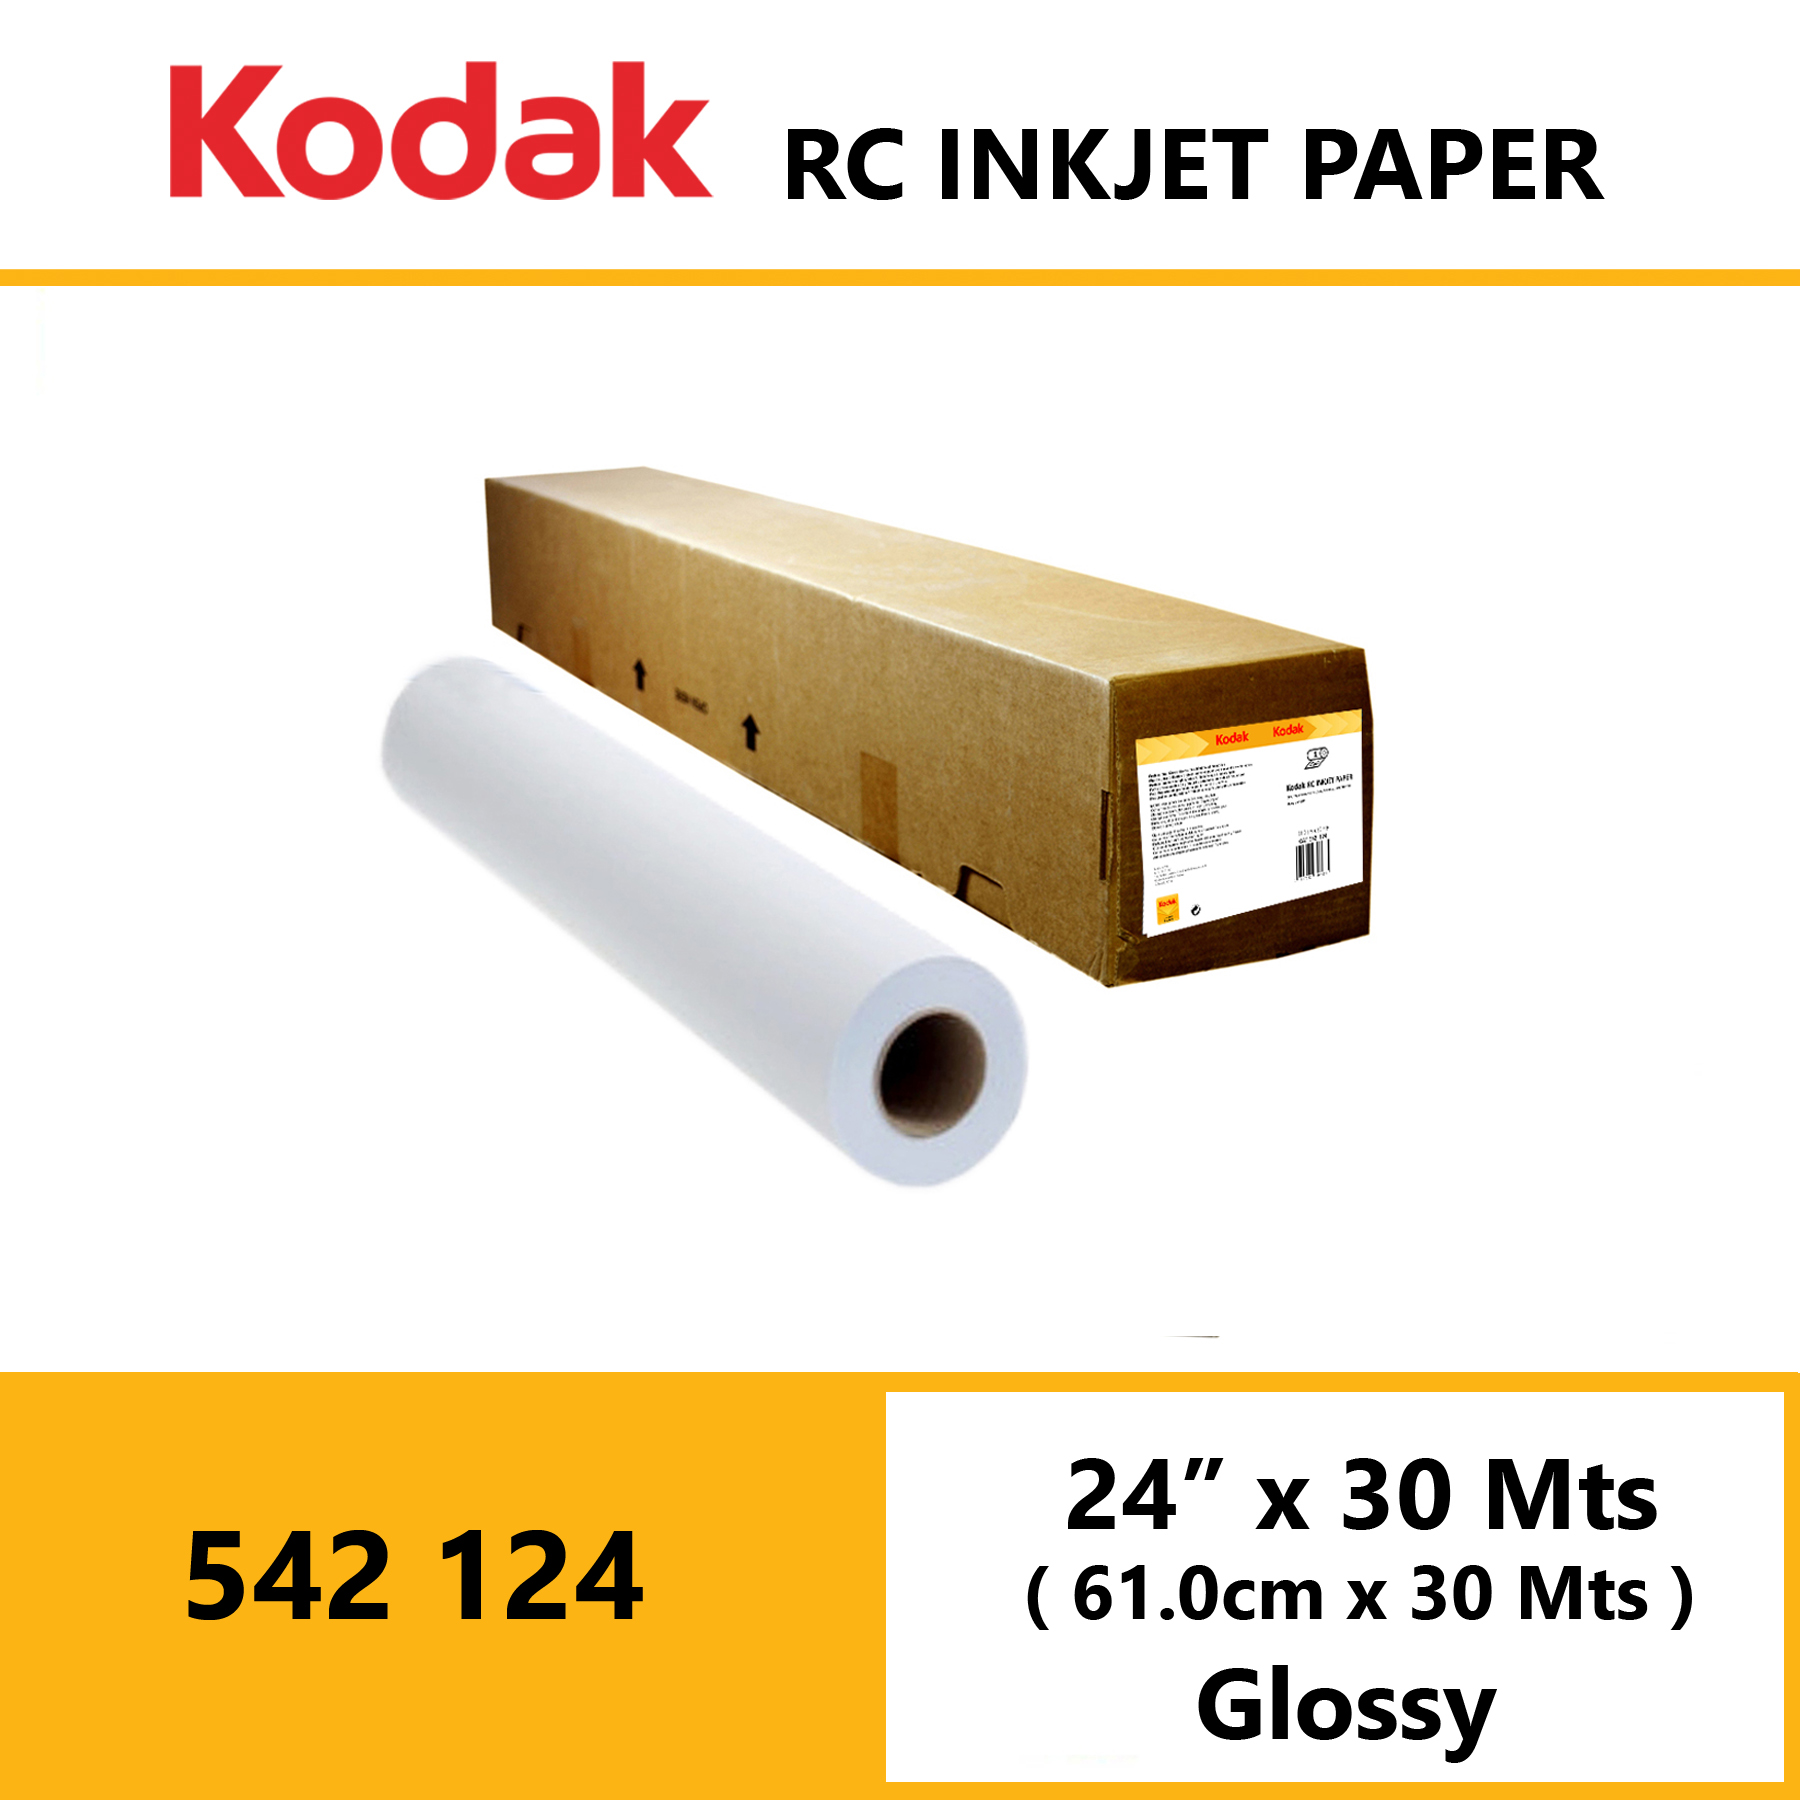 Kodak Inkjet RC Paper 24” x 30 Mtrs Glossy